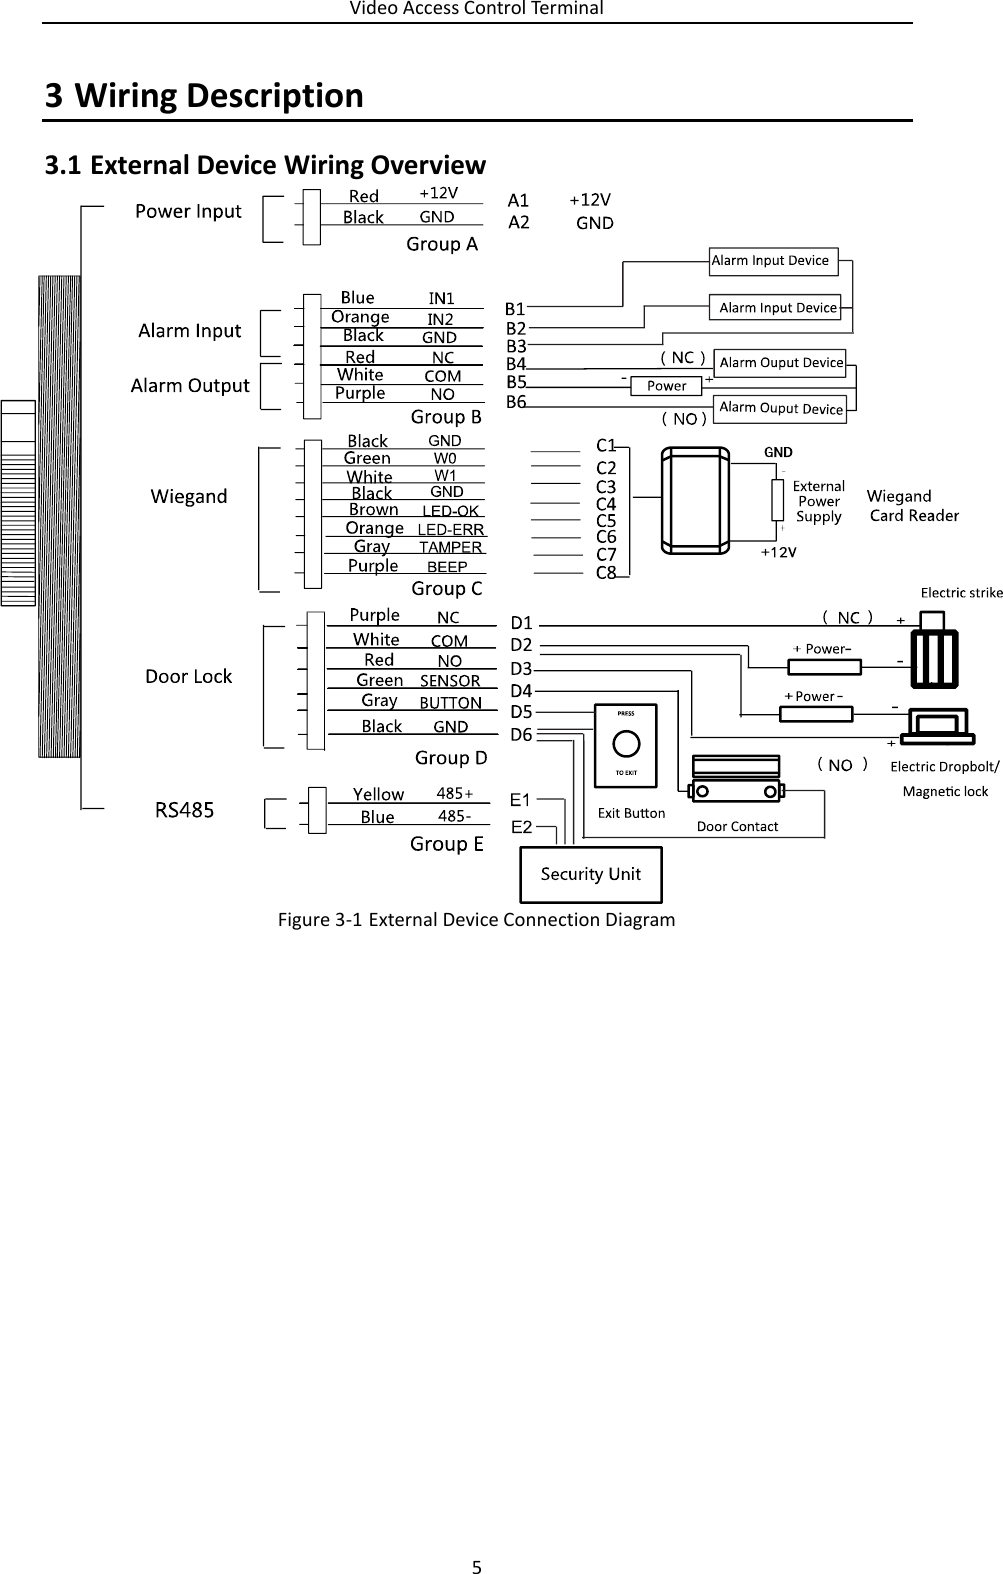 Video Access Control Terminal 5  3 Wiring Description  External Device Wiring Overview 3.1 Figure 3-1 External Device Connection Diagram   